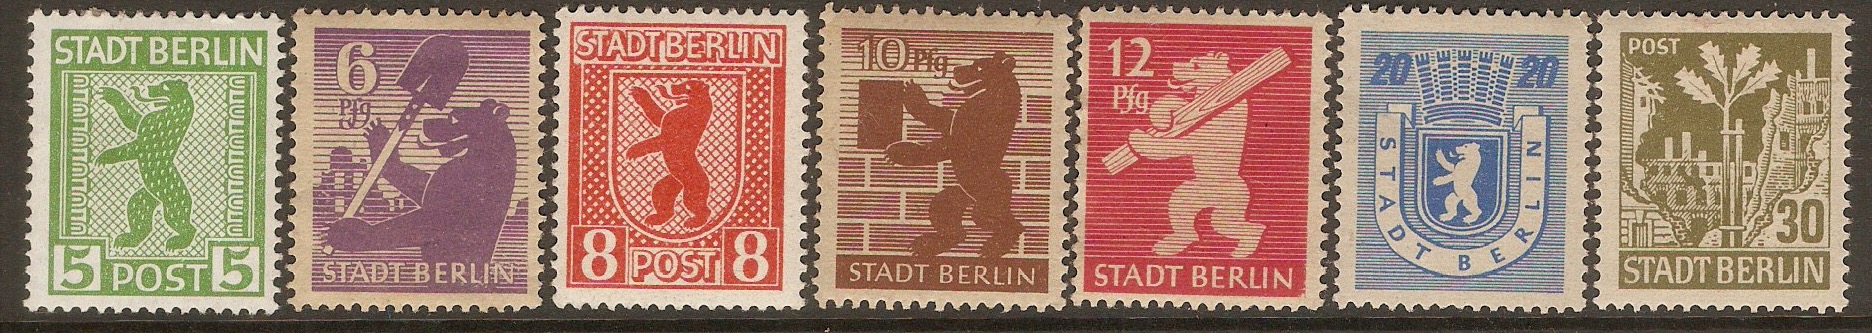 Germany 1945 Stadt Berlin set. SGRA1-SGRA7.